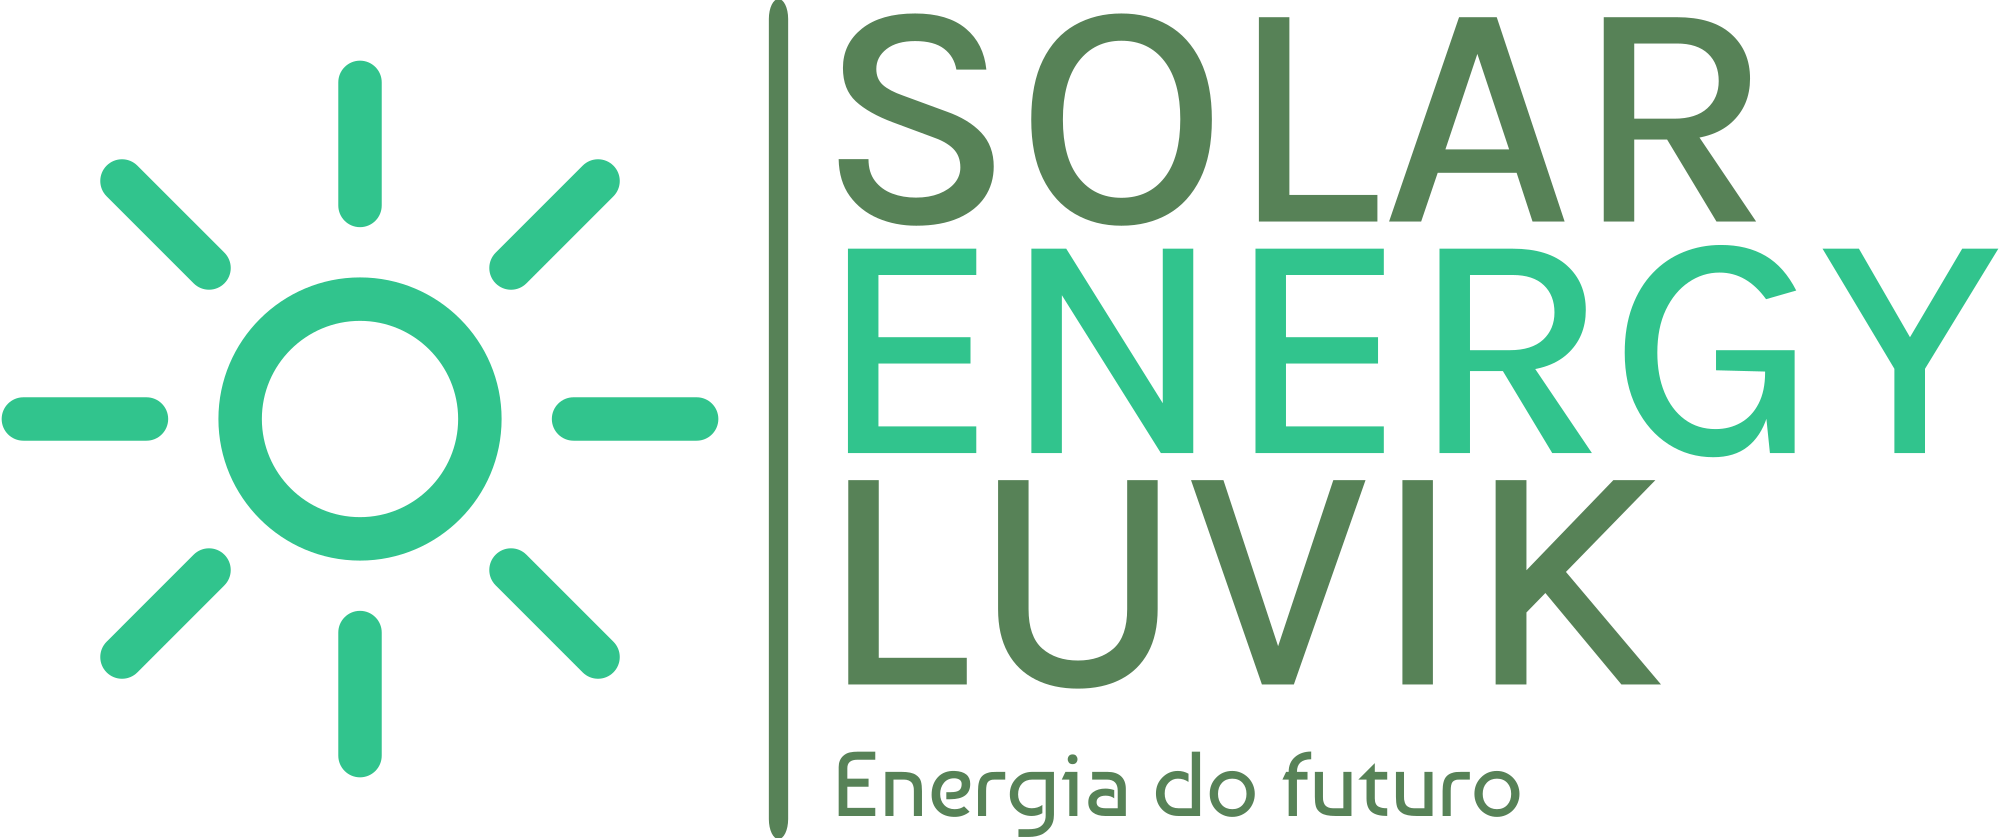 Logo da empresa Solar Energy Luvik